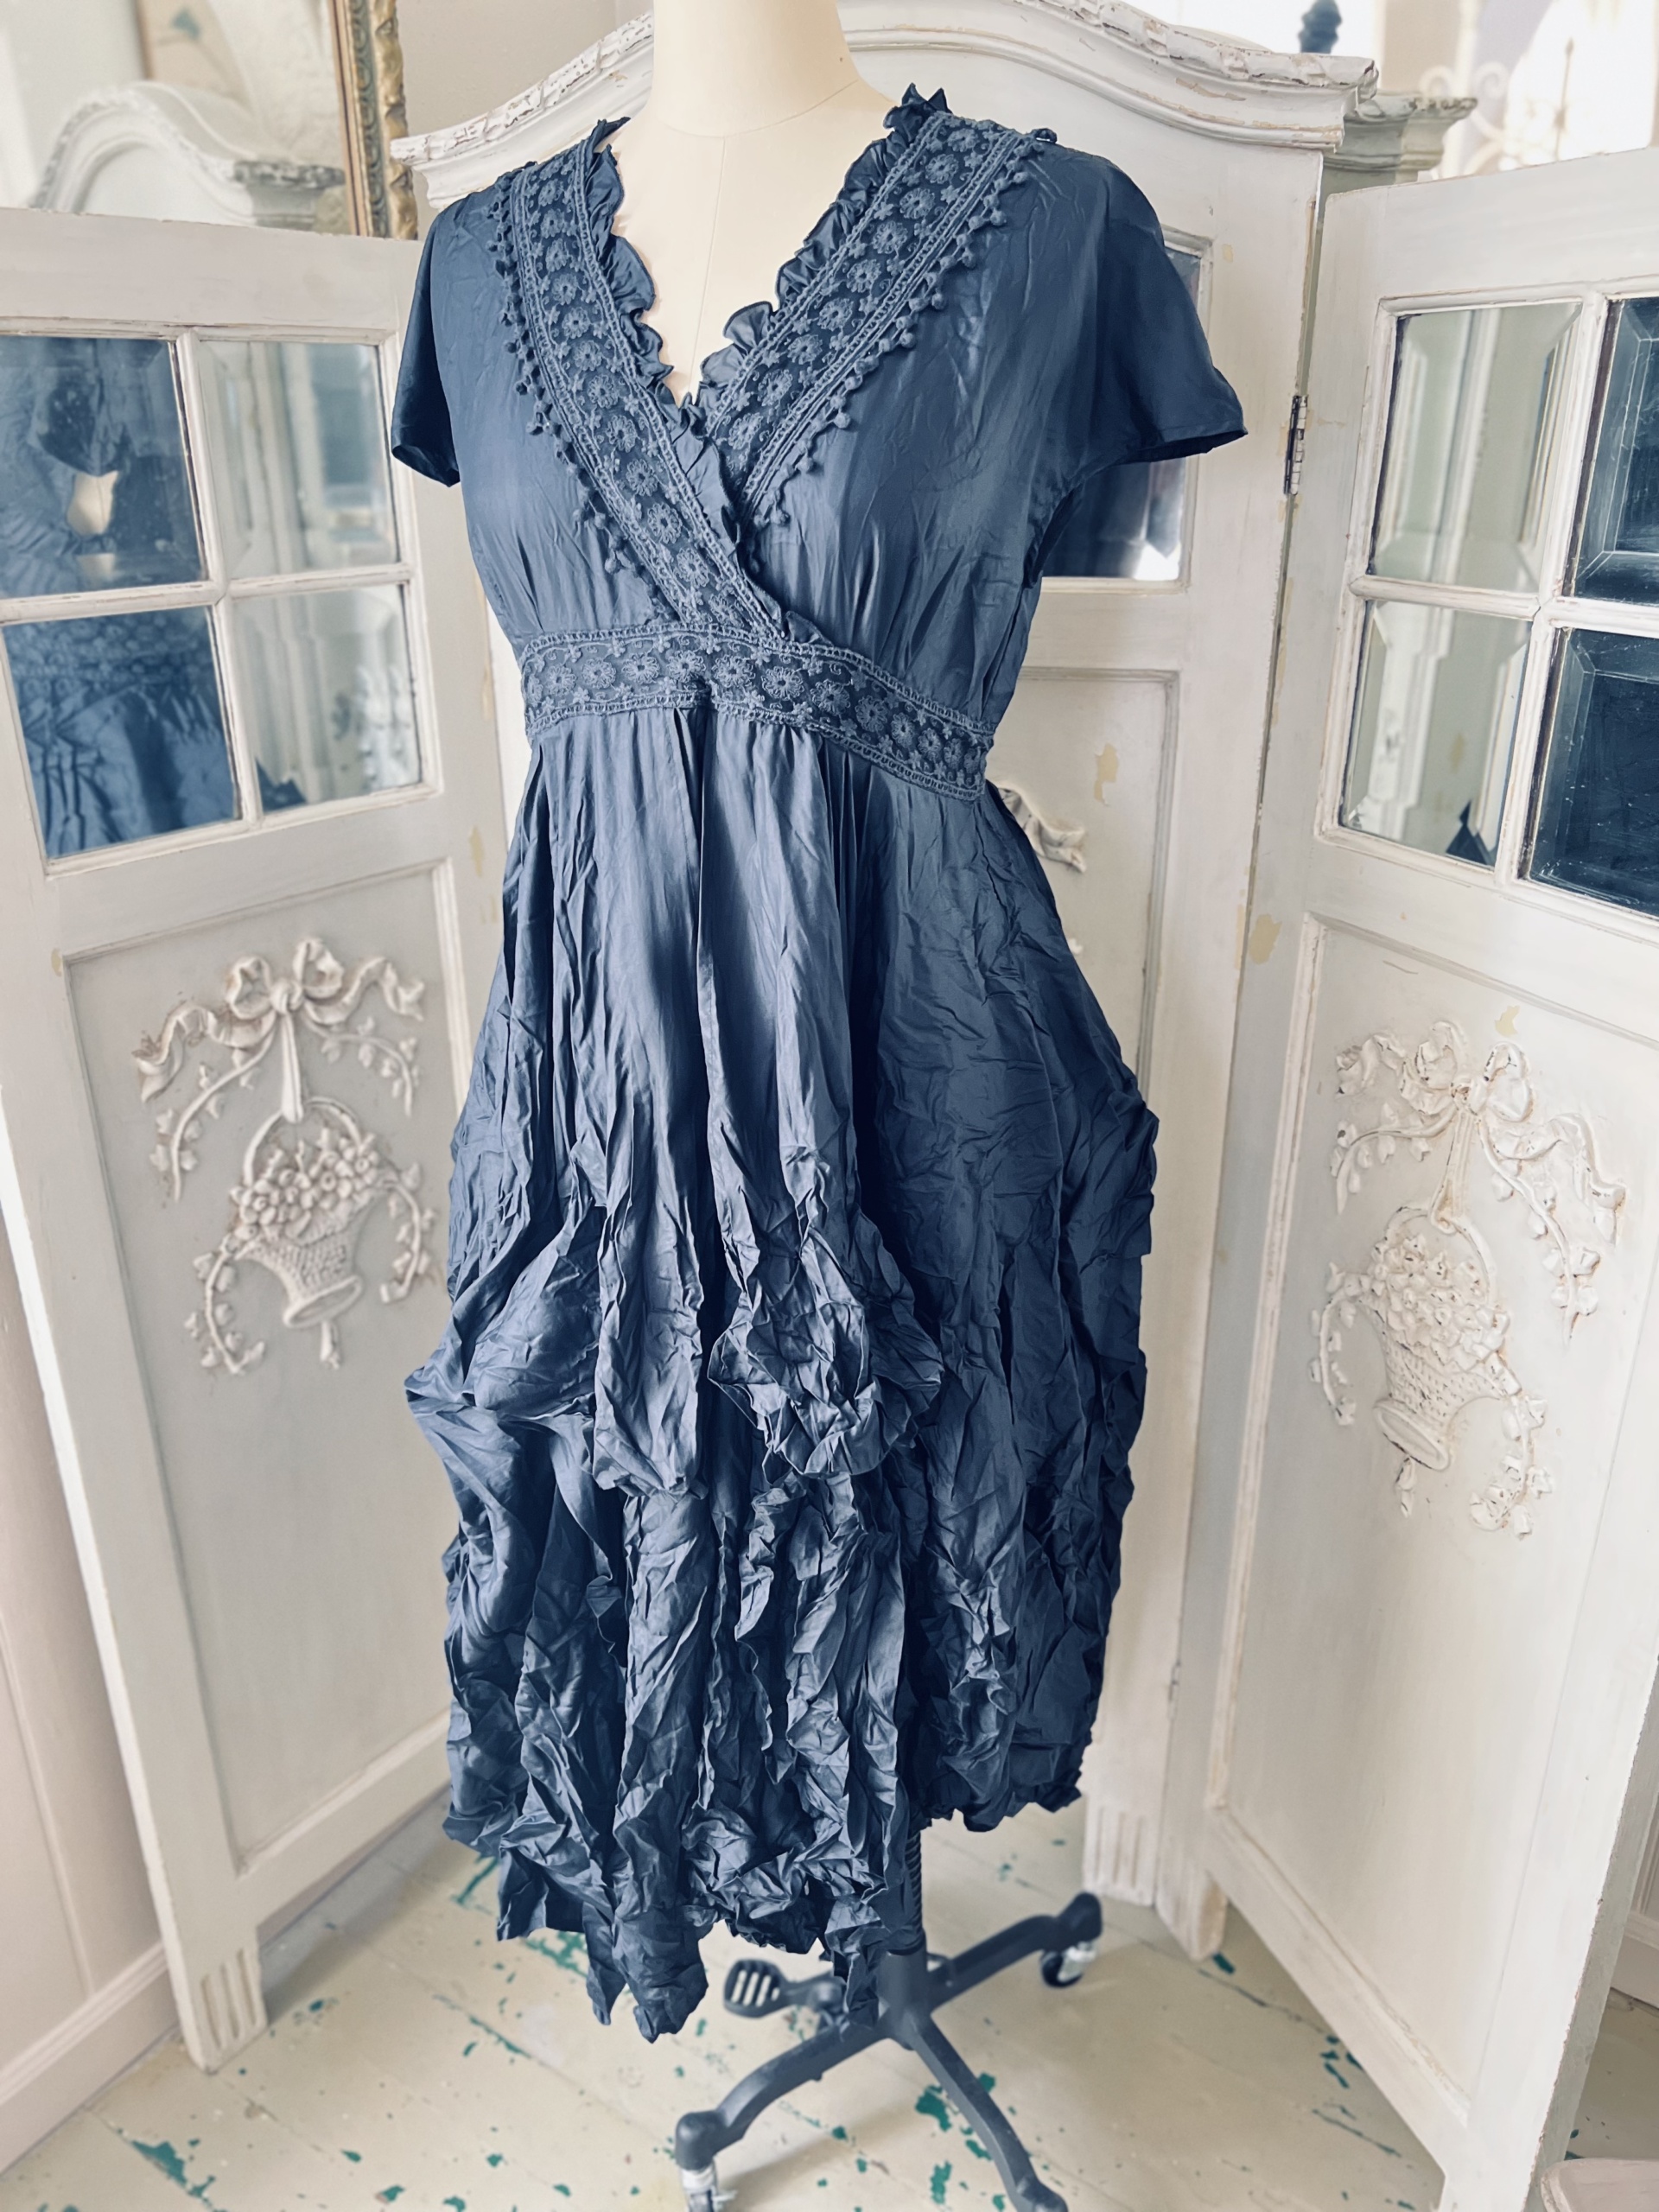 Ewa i walla Rose Dress 100% silk in Noir